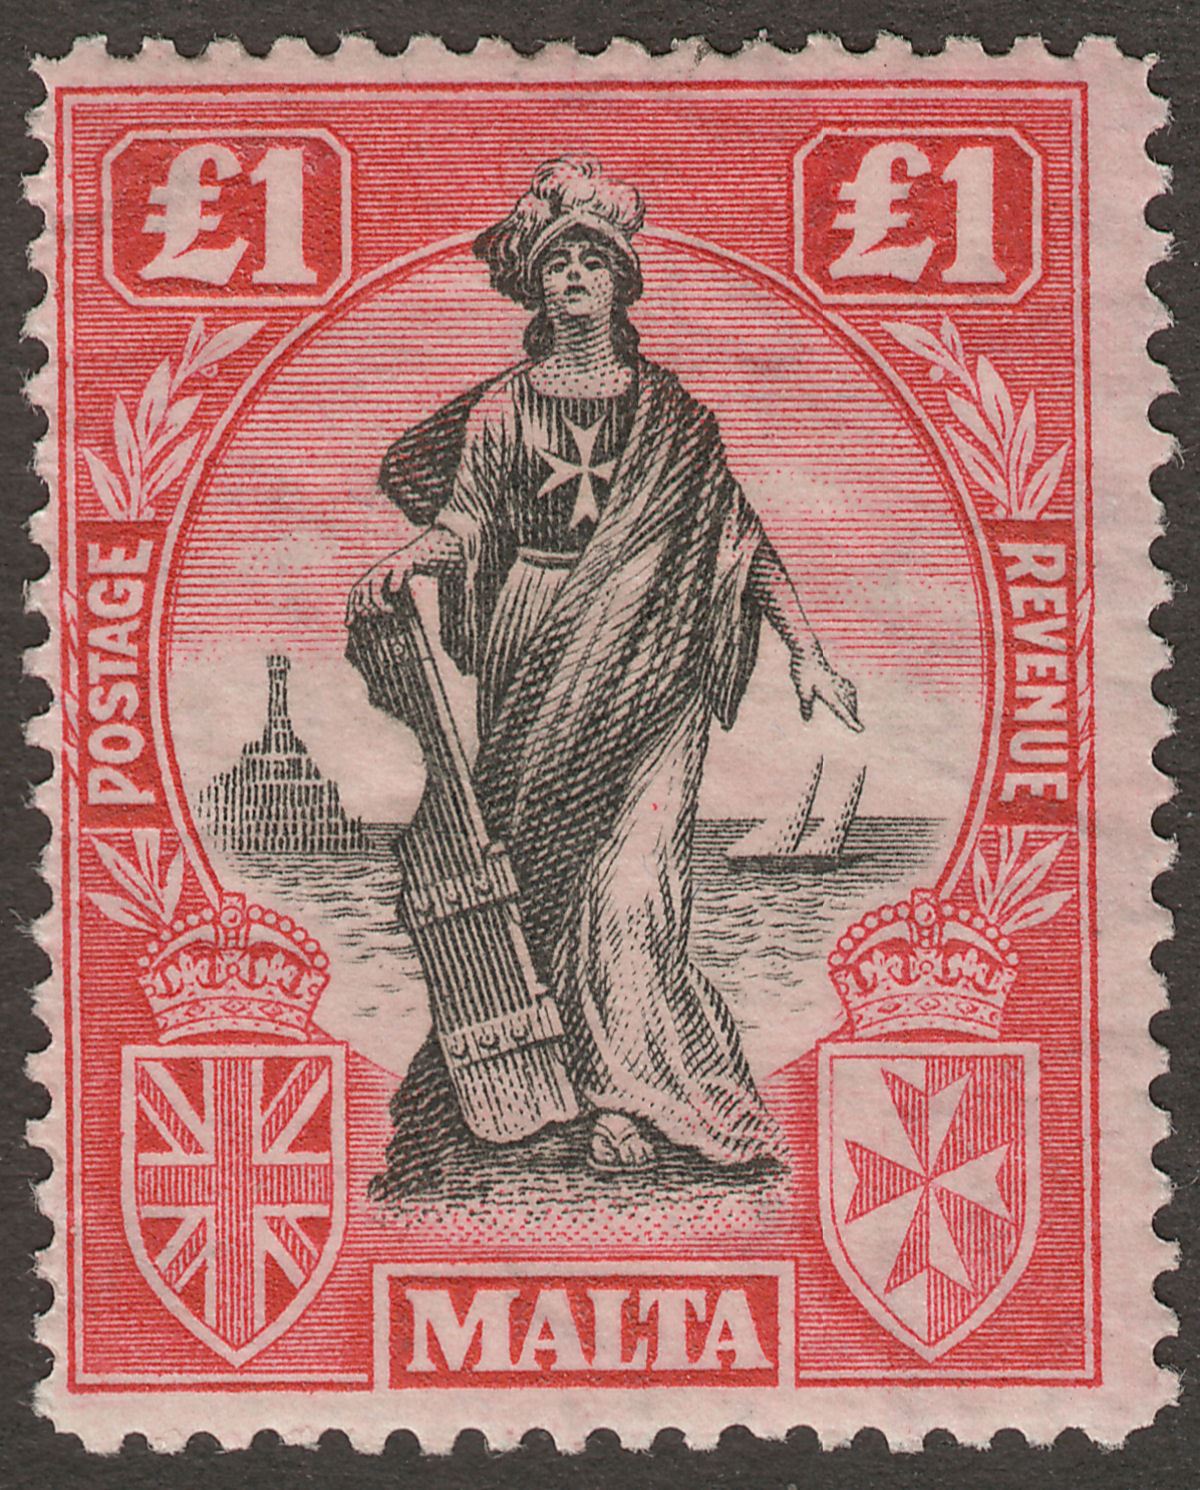 Malta 1922 KGV Figure £1 Black and Carmine-Red wmk Sideways Mint SG139 cat £150